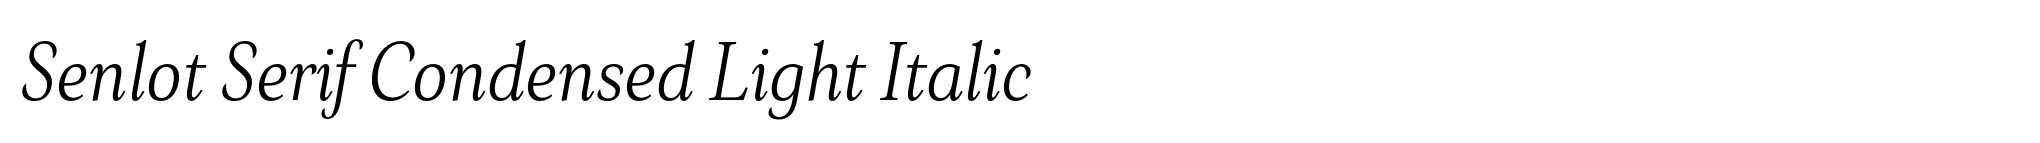 Senlot Serif Condensed Light Italic image